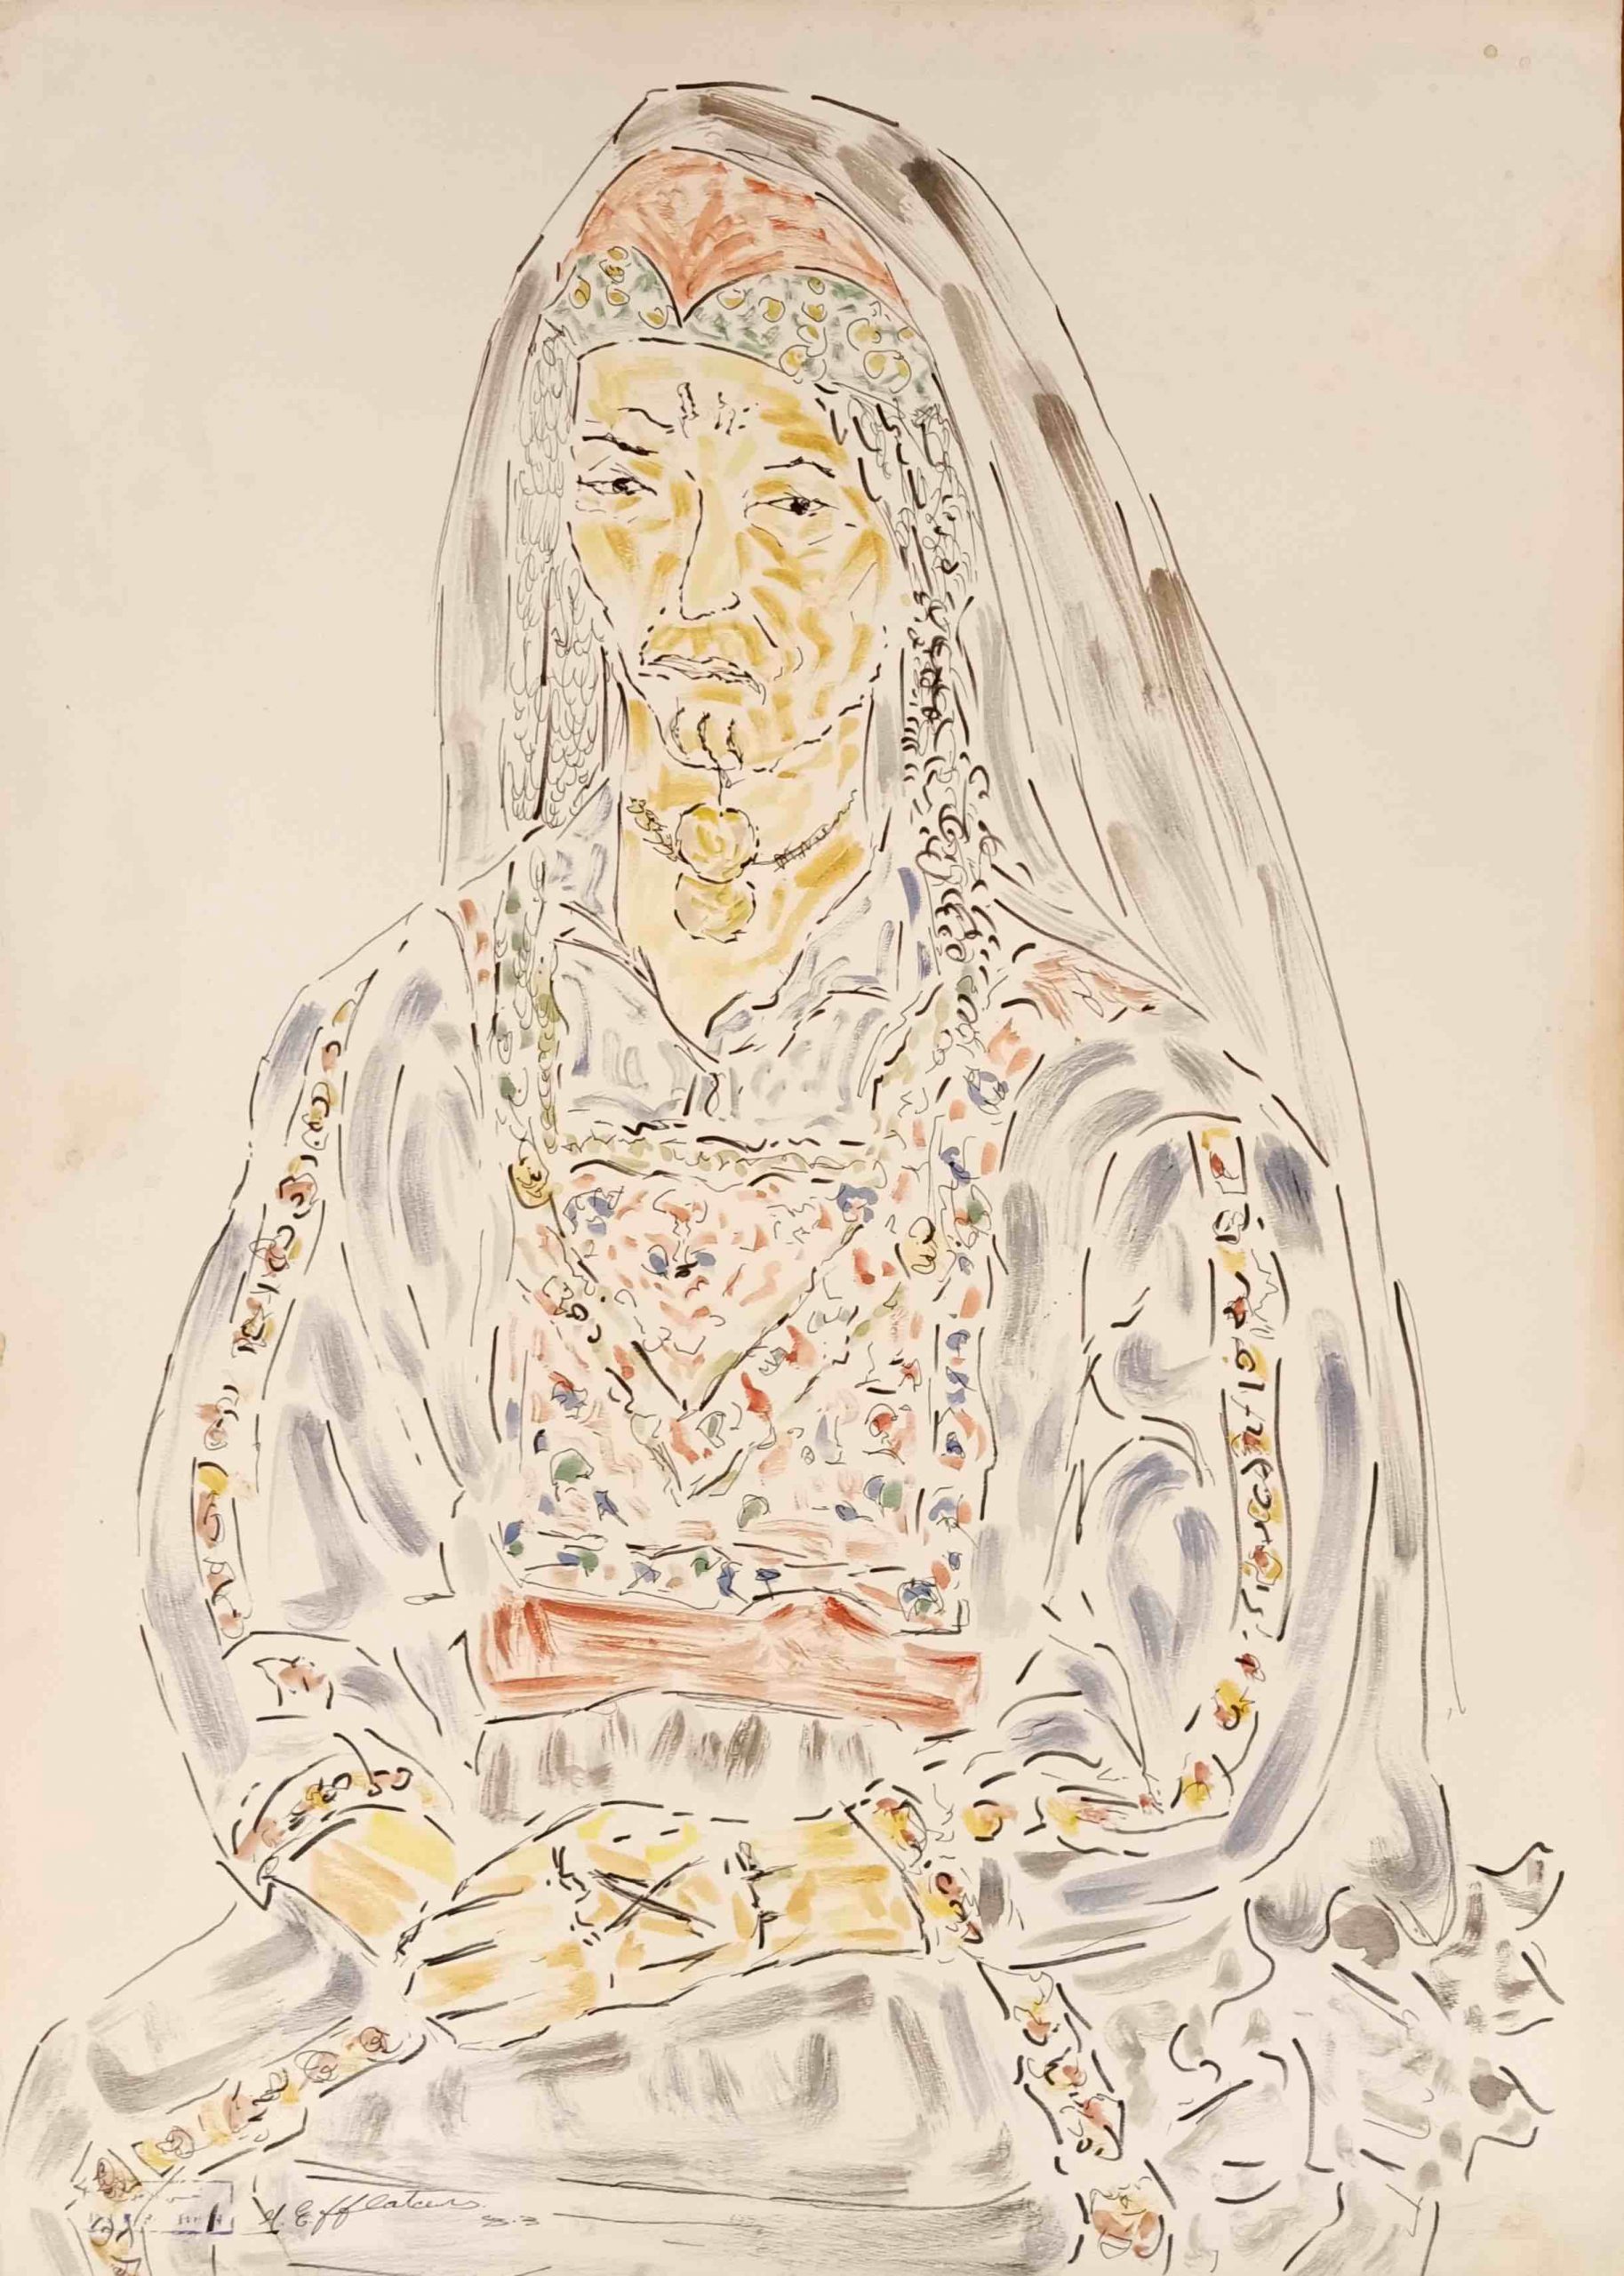 INJI EFFLATOUN, Badawiya [Bedouin], 1984 Watercolour on rough thick paper 55 x 80 cm Signed dated lower right